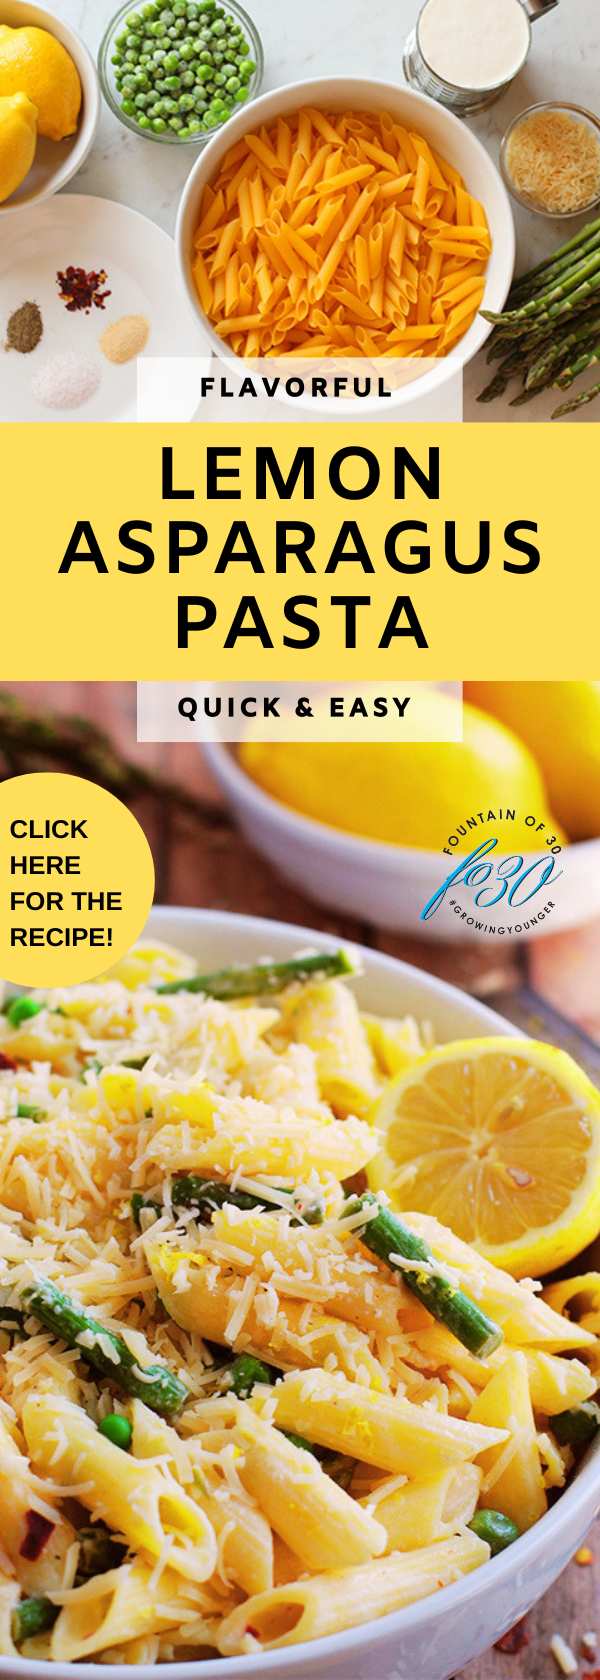 easy to make fresh lemon asparagus penne pasta fountainof30